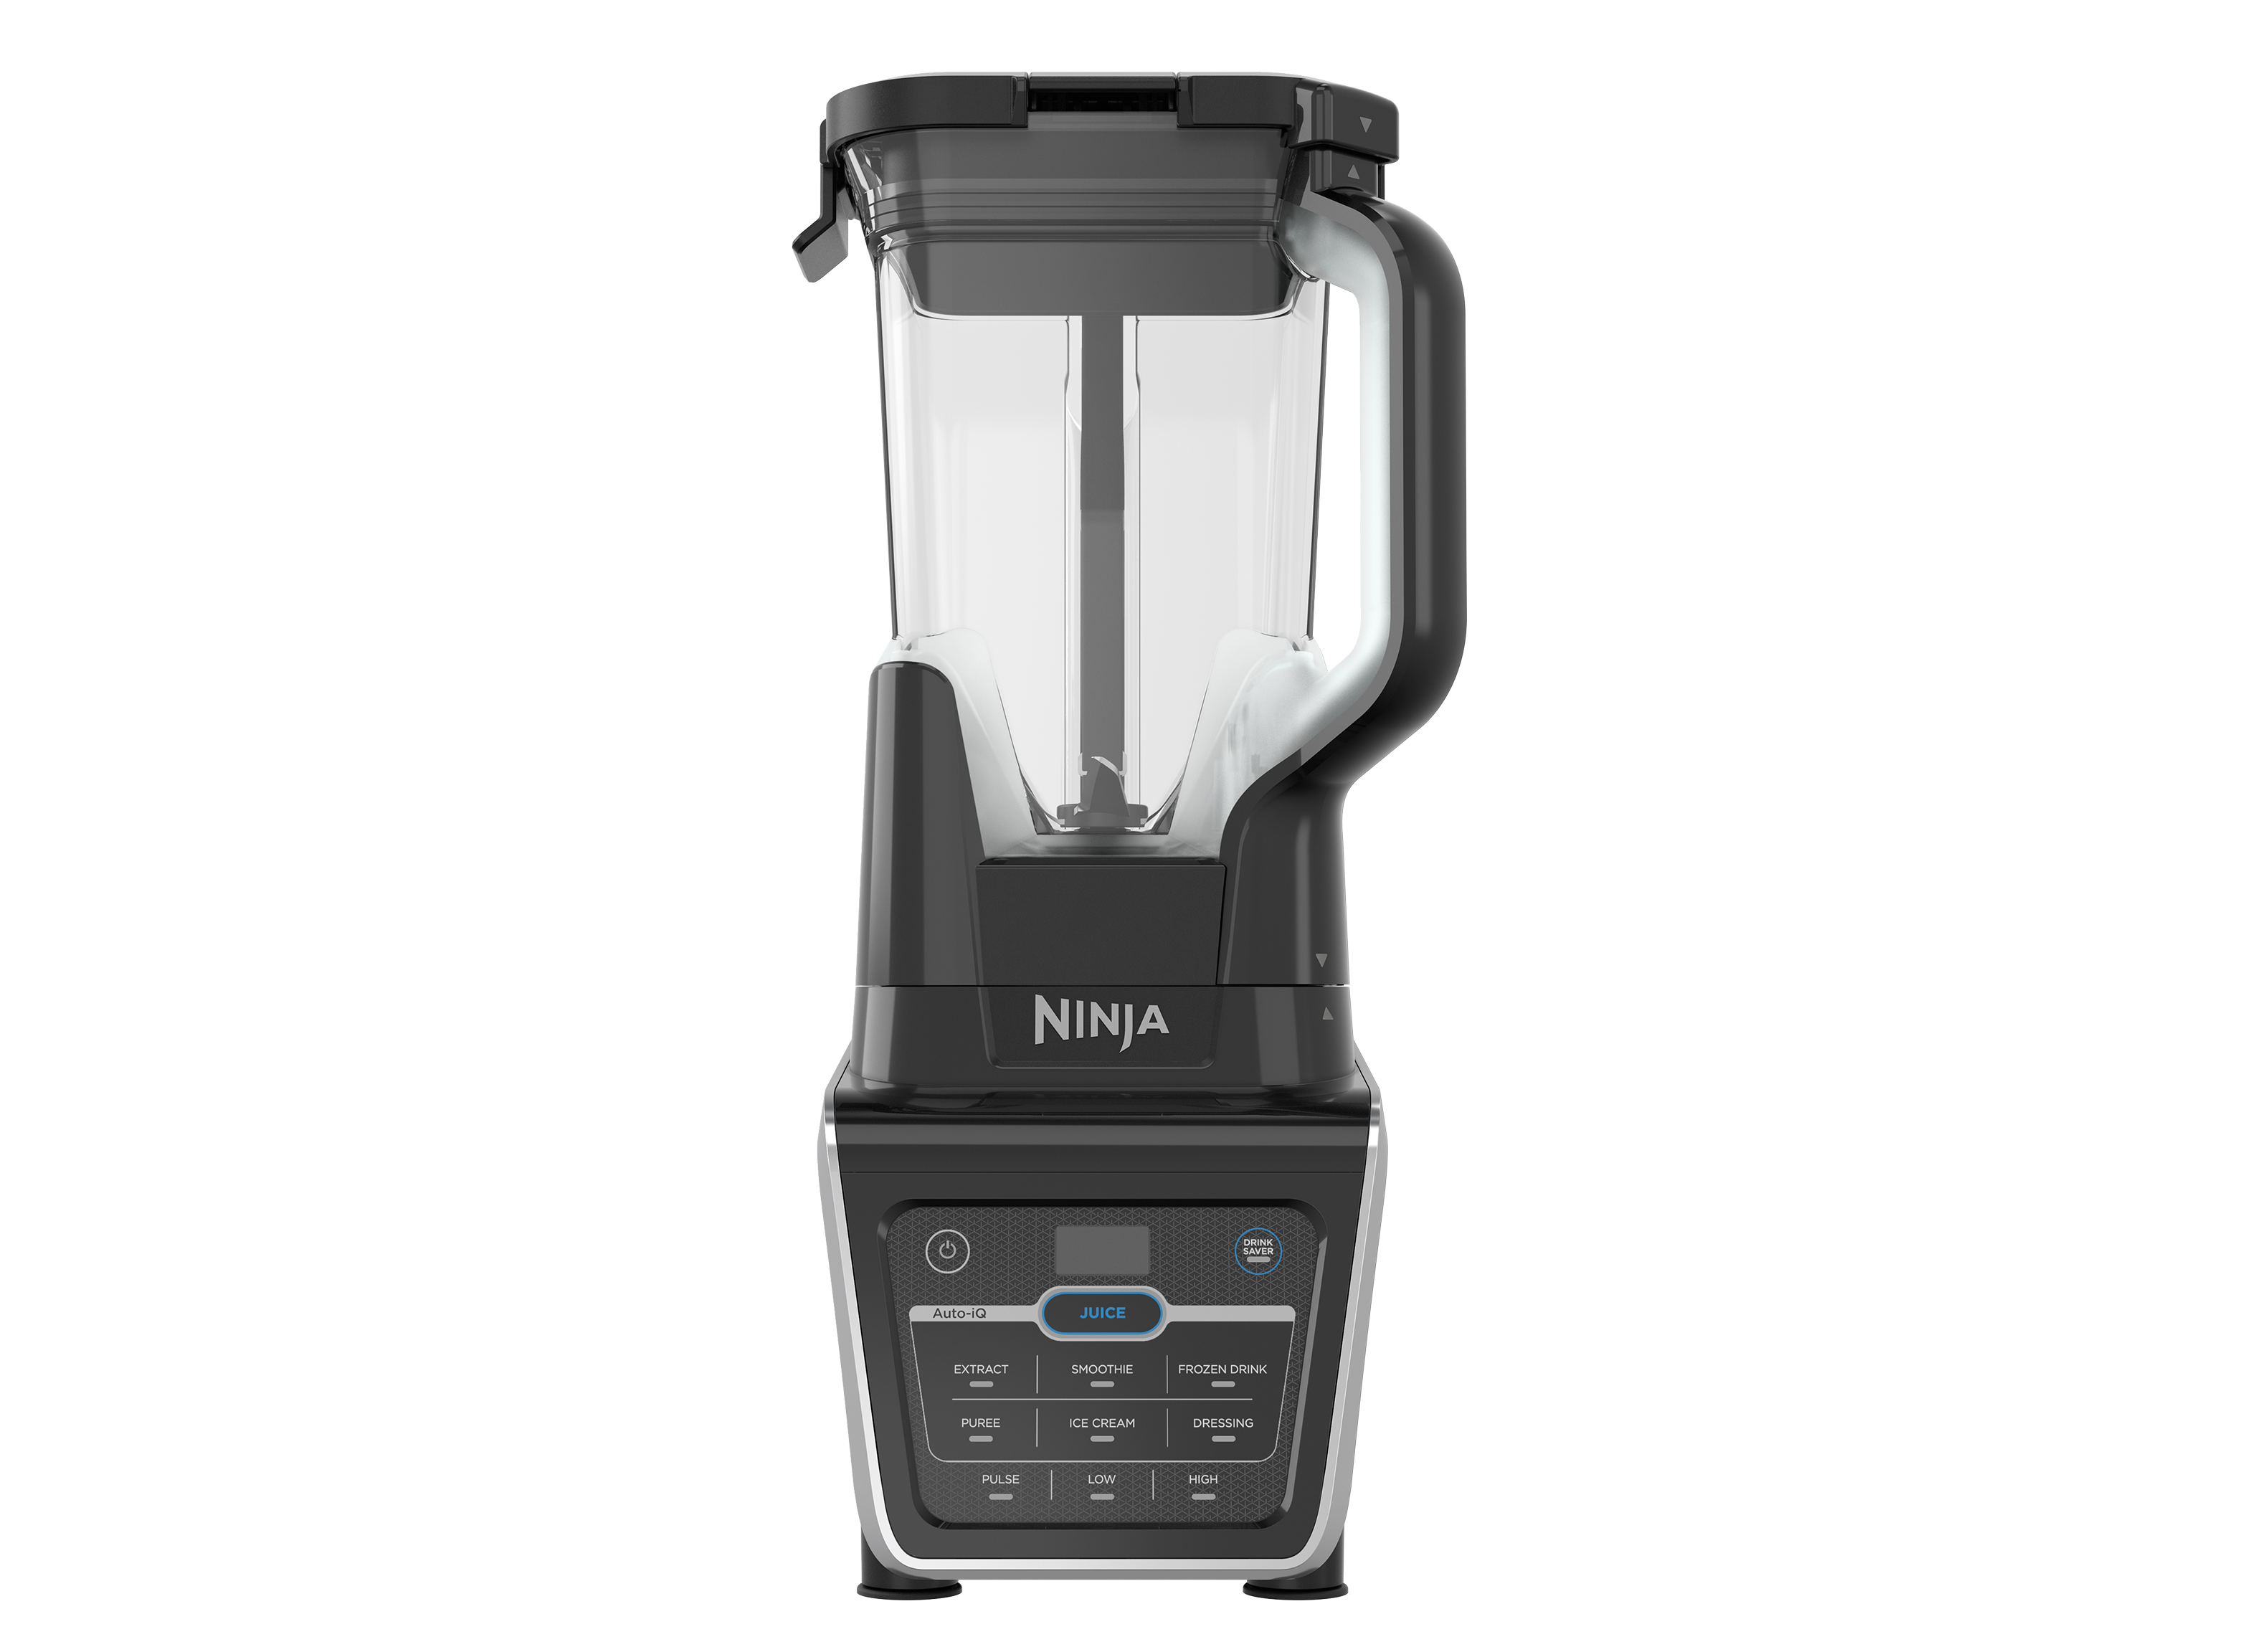 Ninja Blender DUO with Micro-Juice Technology